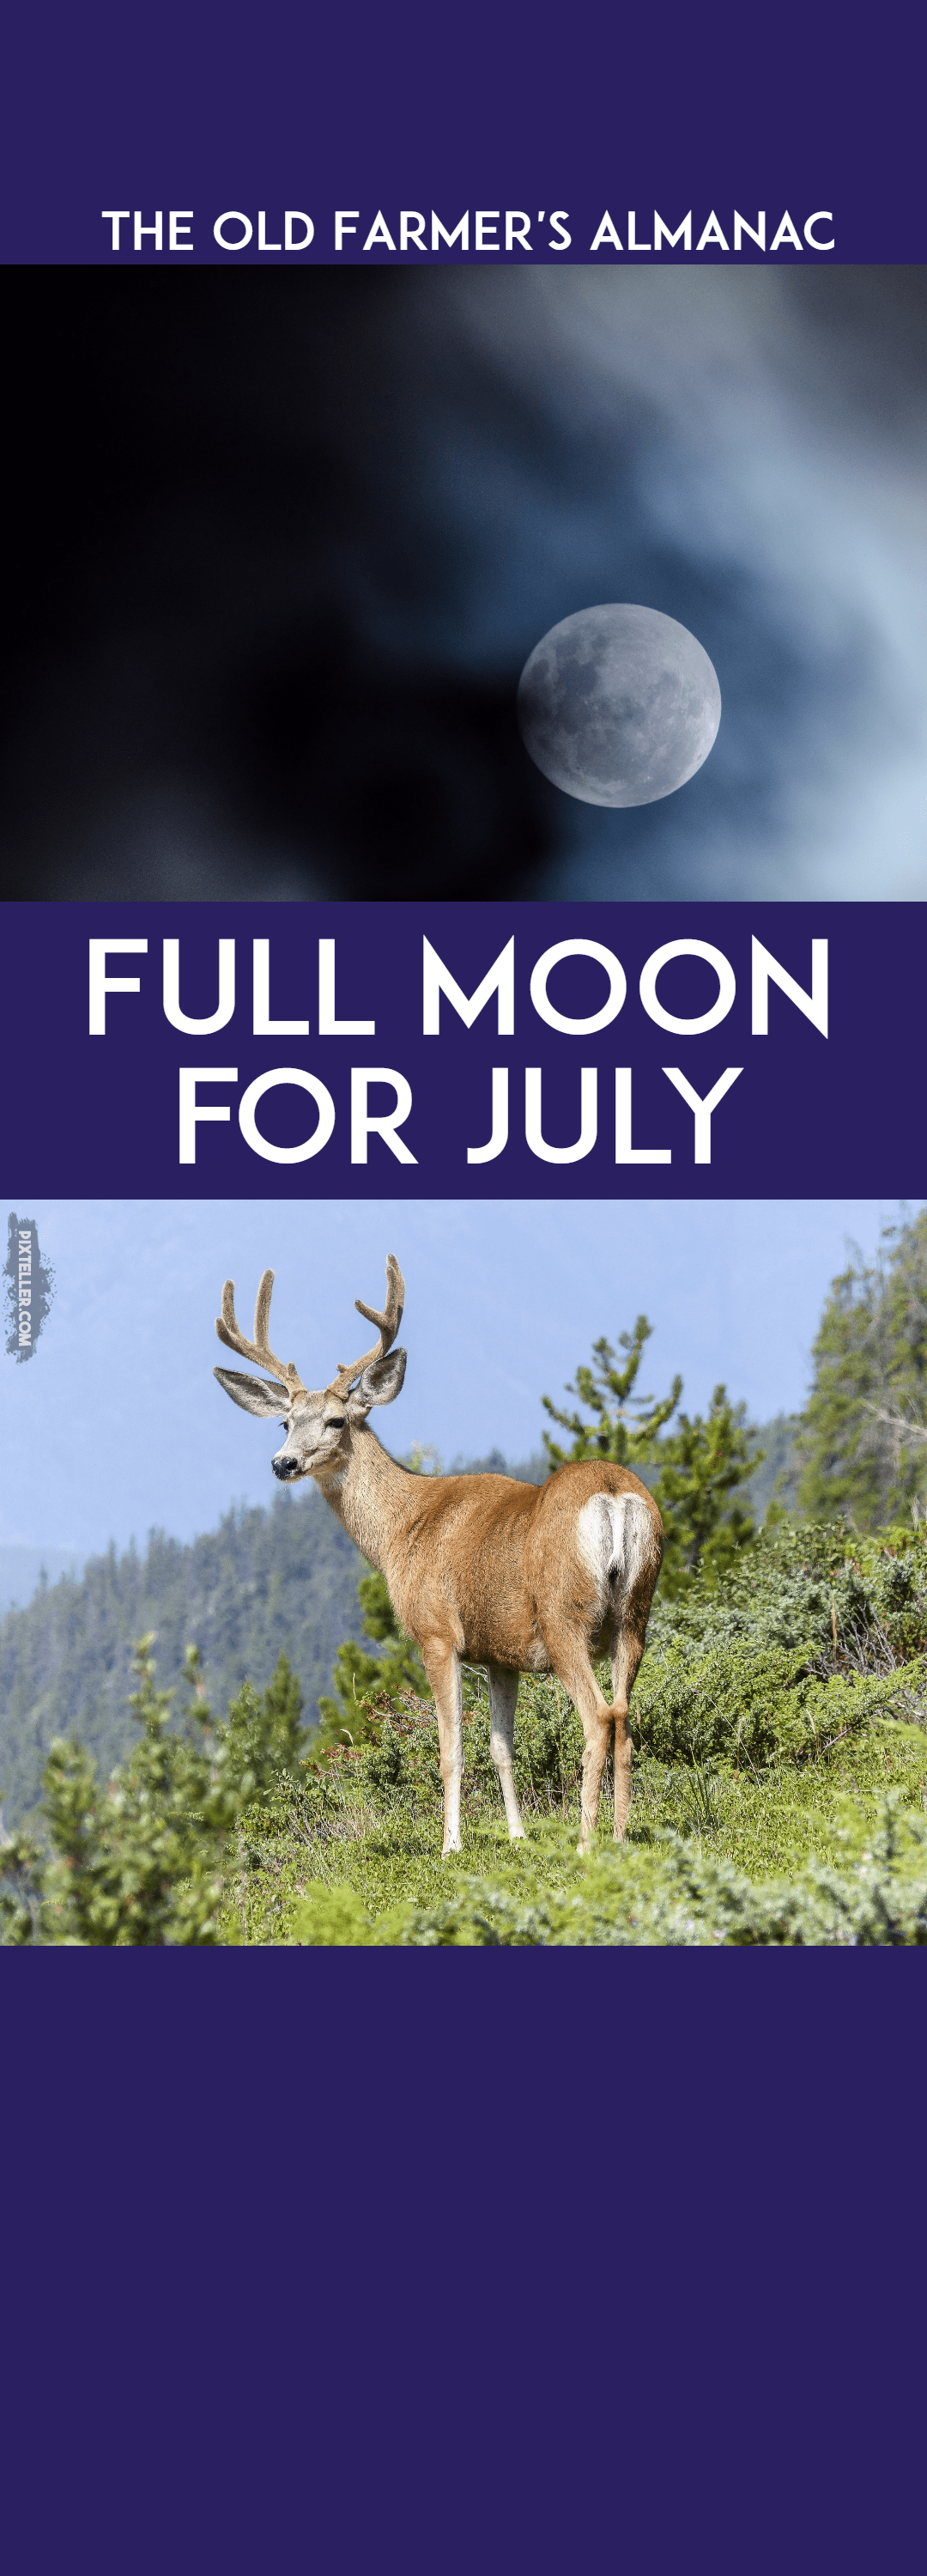 OFA 3-28-17 Full Moon July Design 